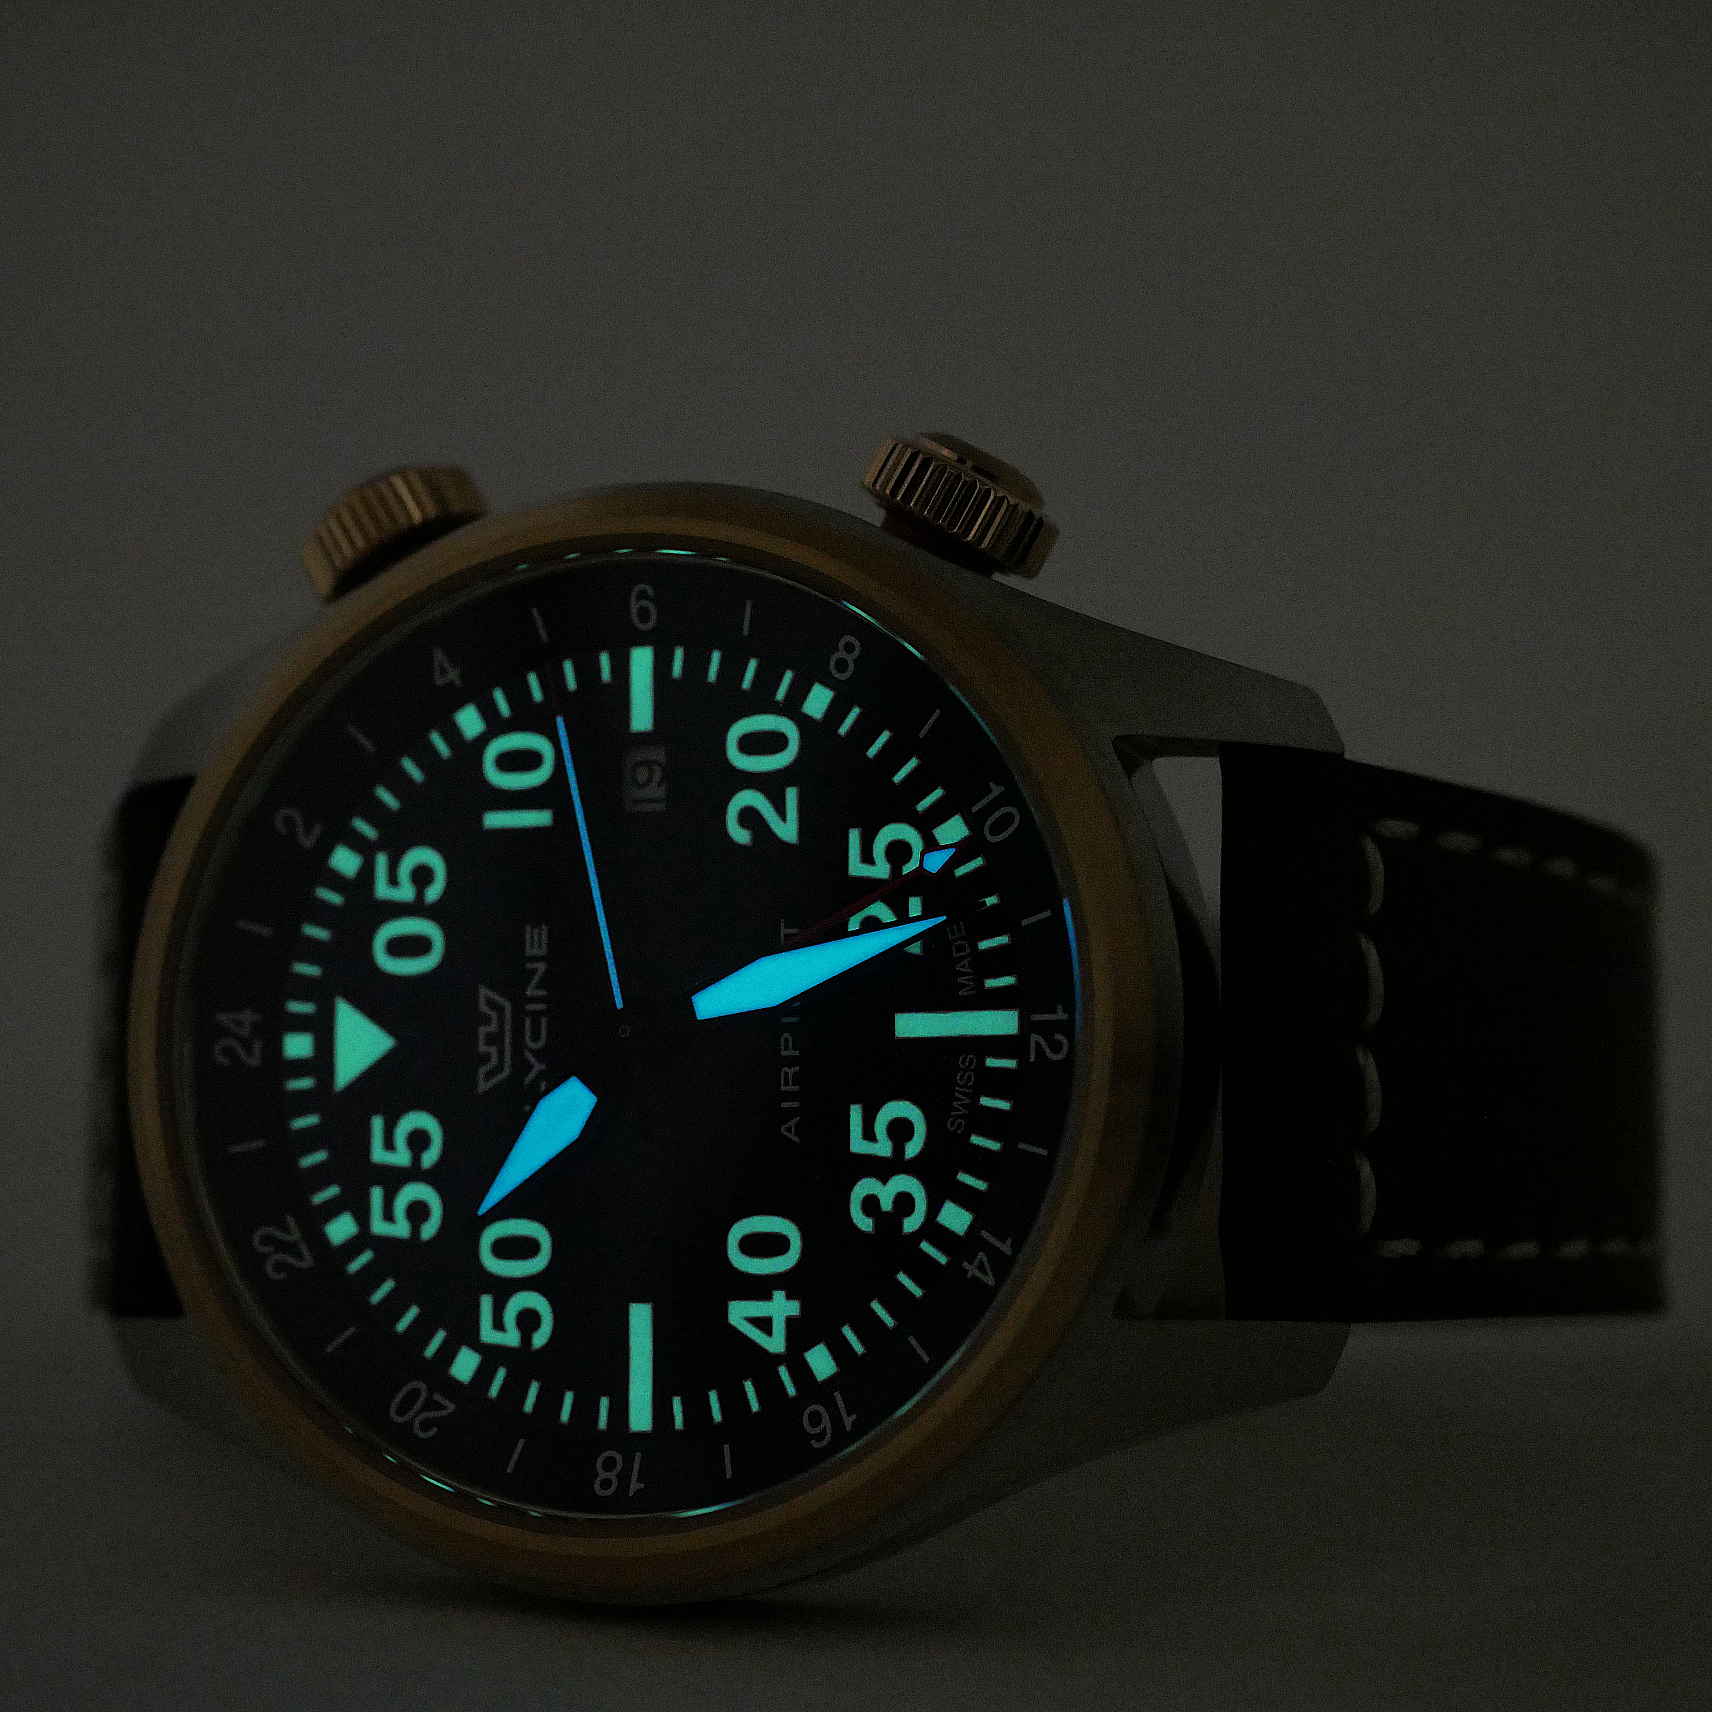 Glycine Airpilot GMT Swiss Men's Watch Blue Dial / Leather Strap GL0352